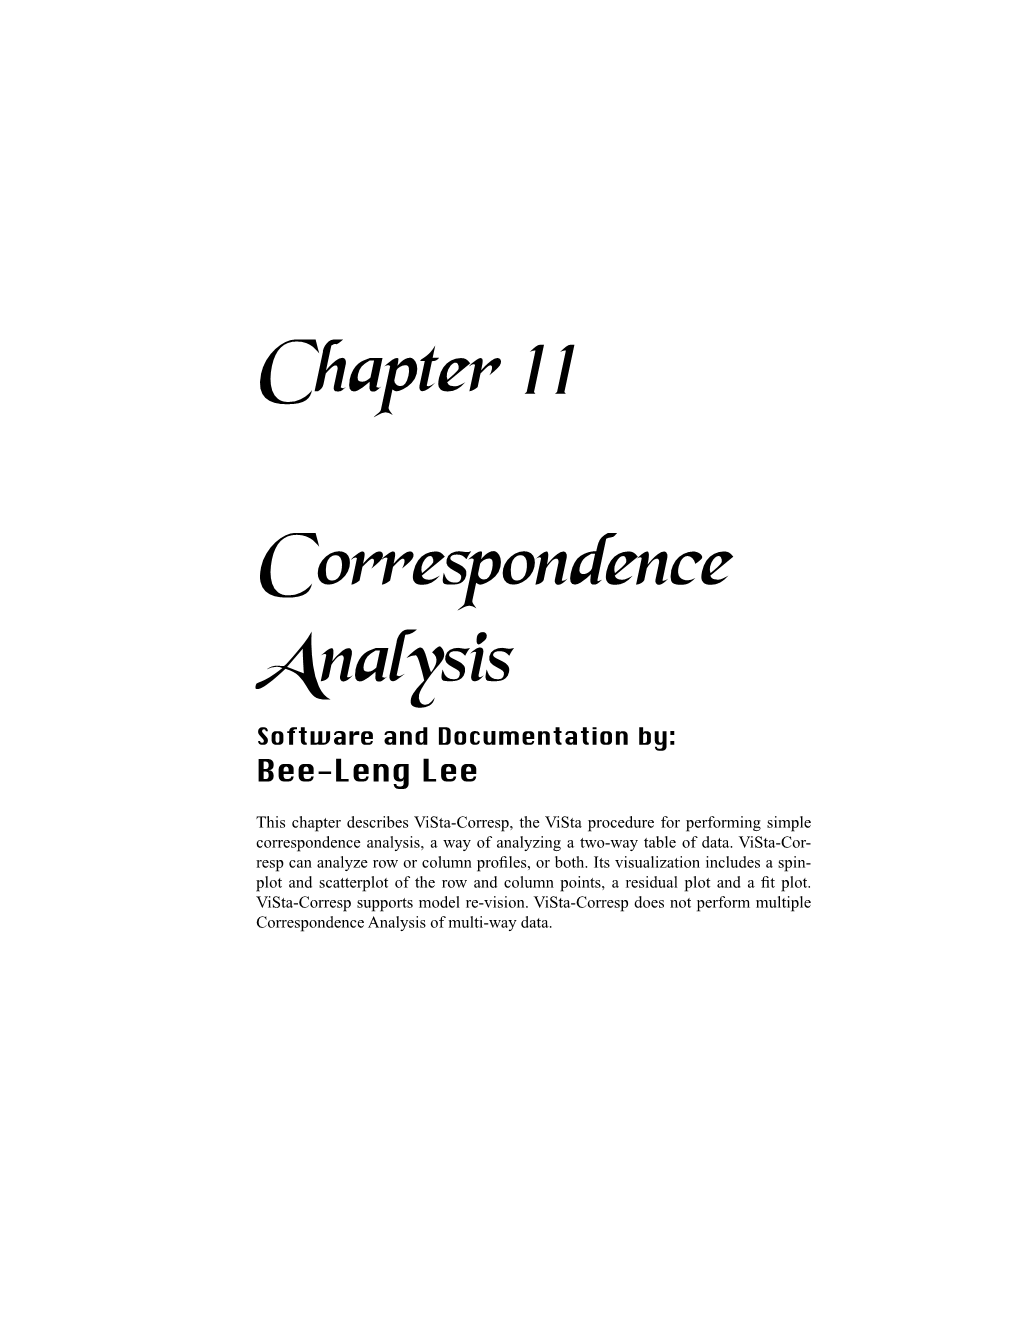 Chapter 11 Correspondence Analysis